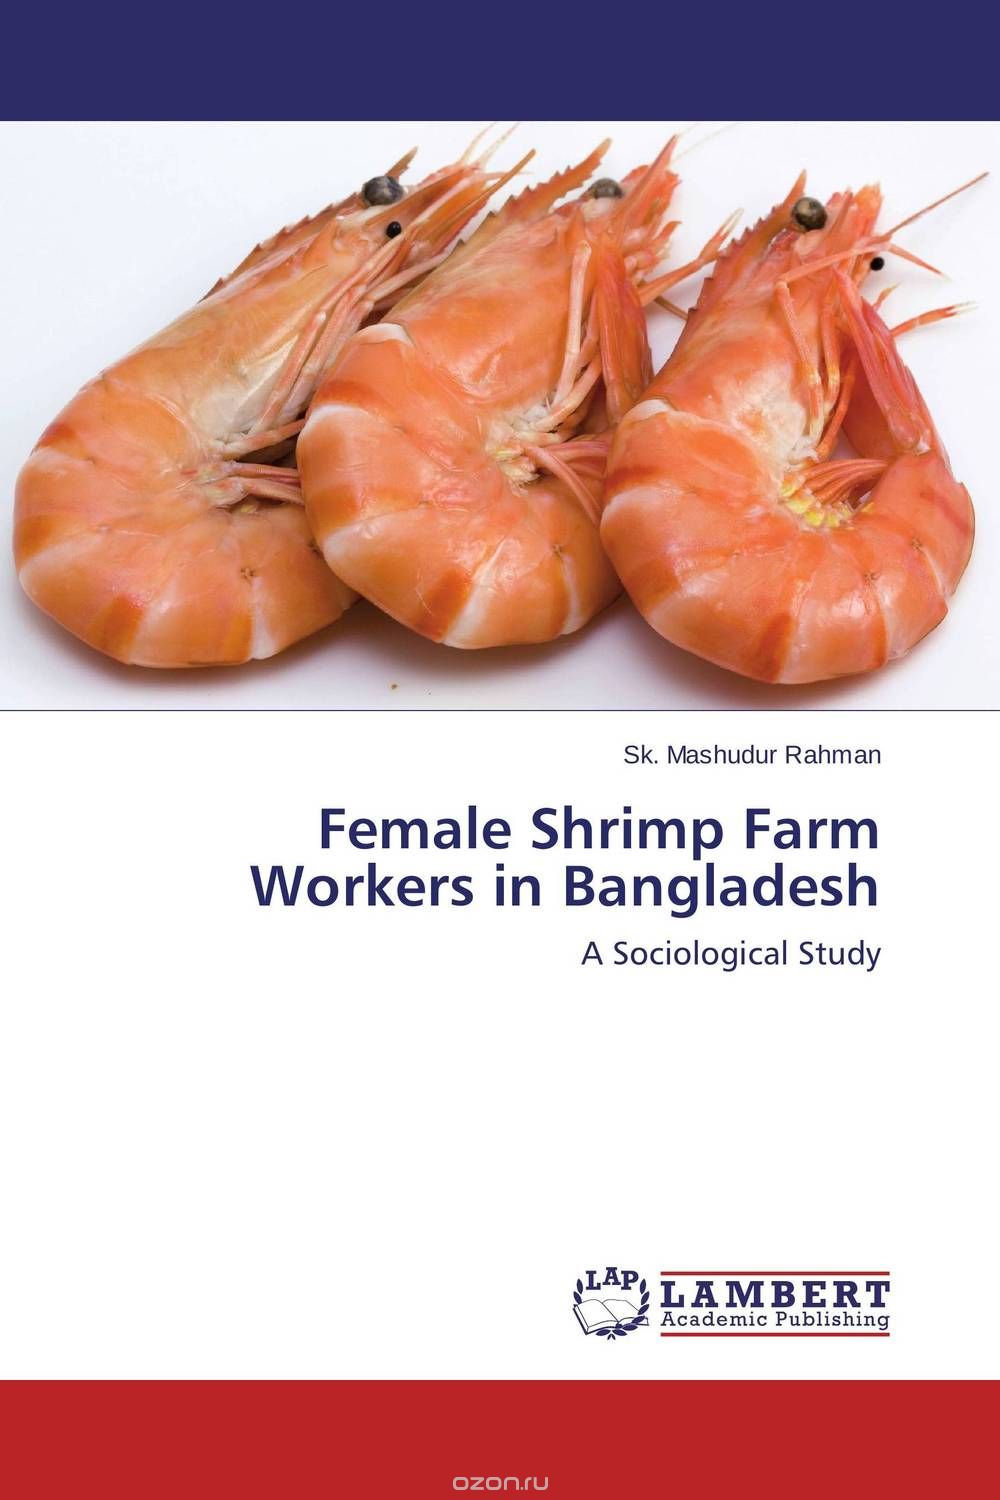 Скачать книгу "Female Shrimp Farm Workers in Bangladesh"